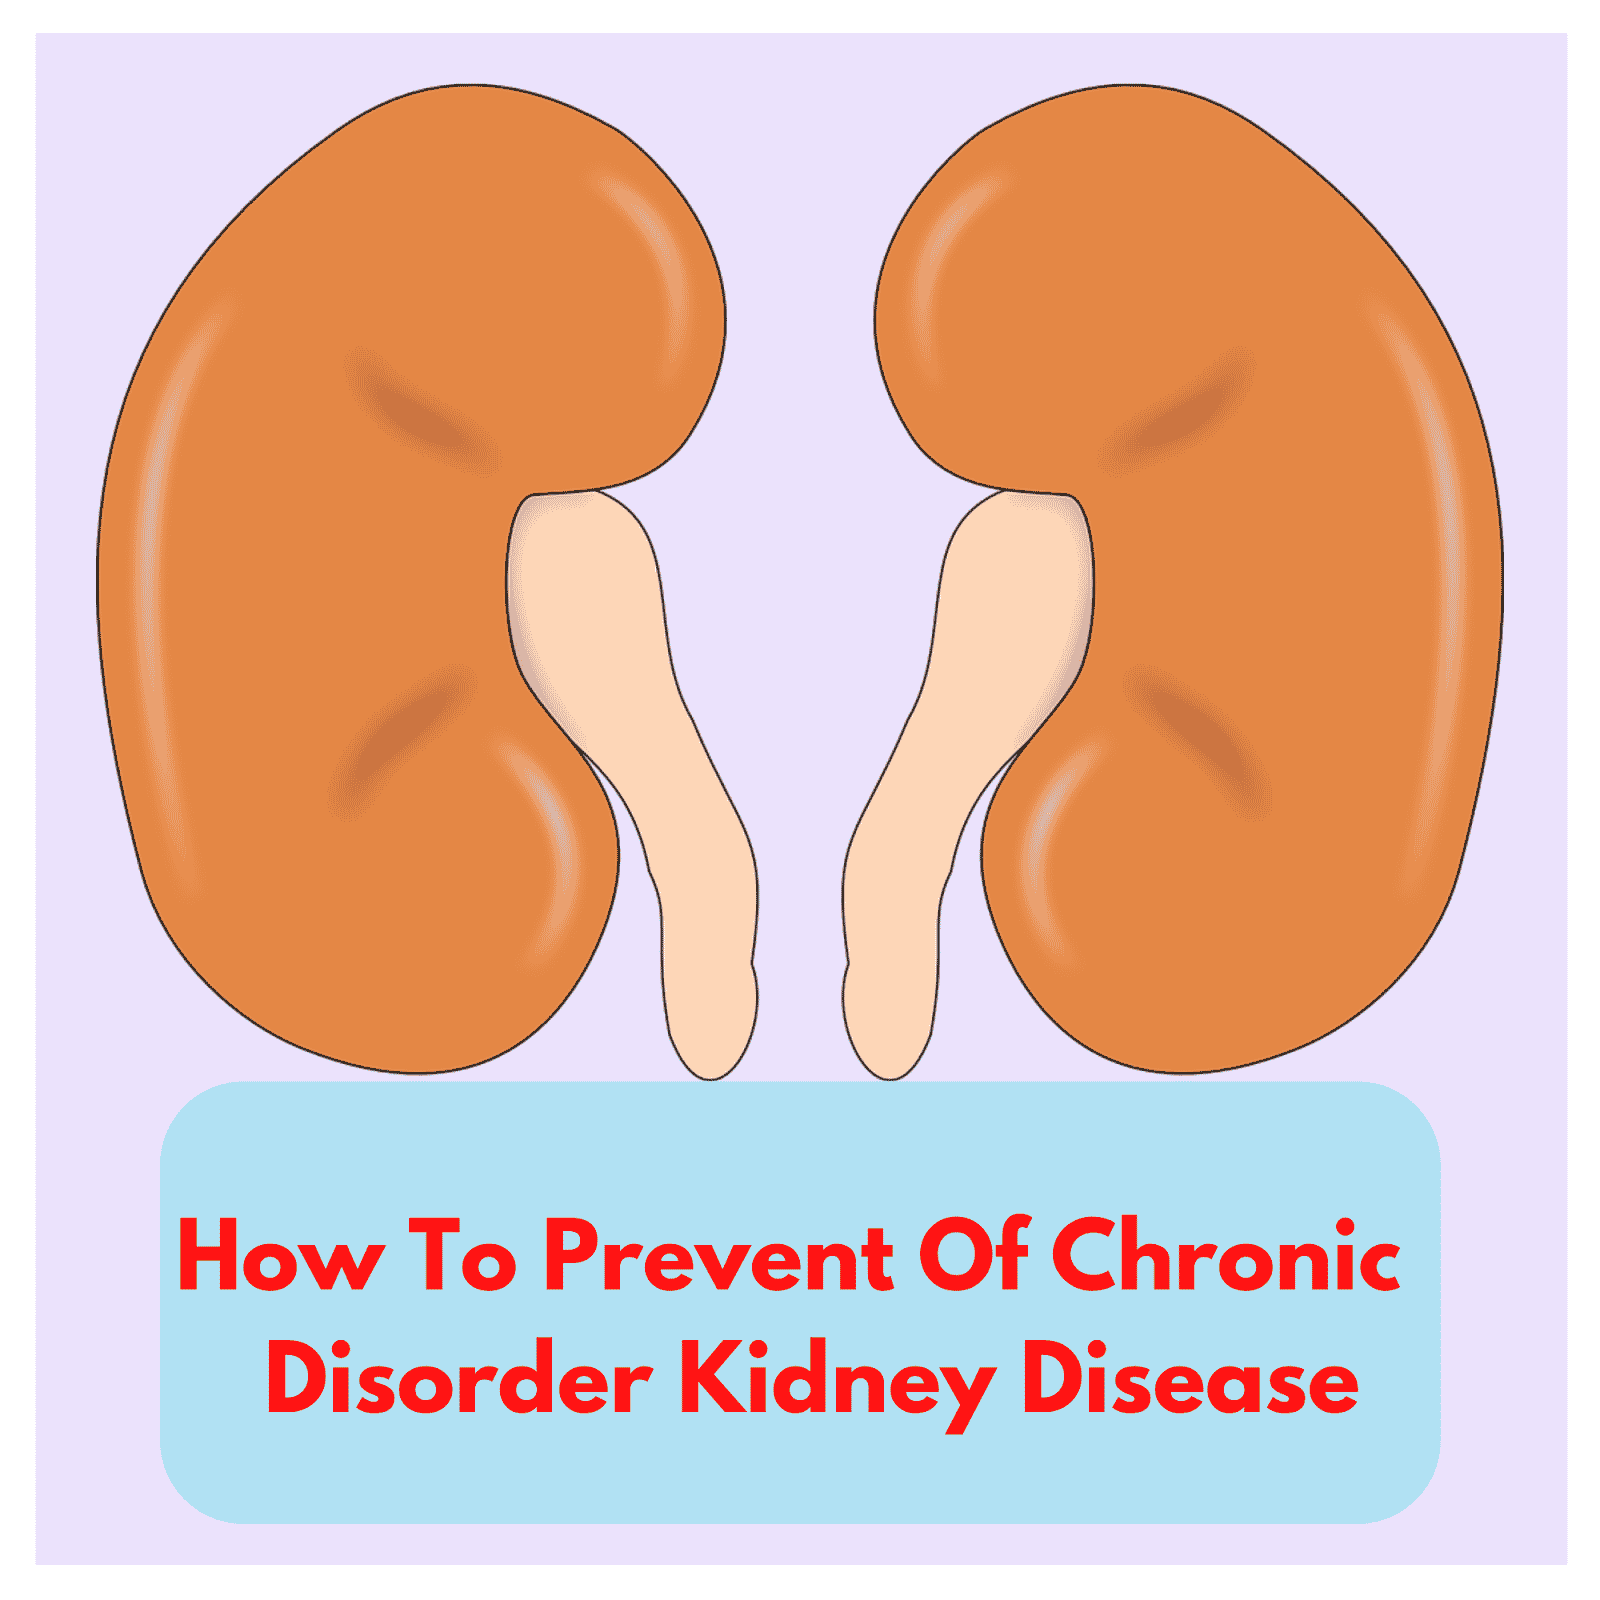 How To Prevent Of Chronic Disorder Kidney Disease